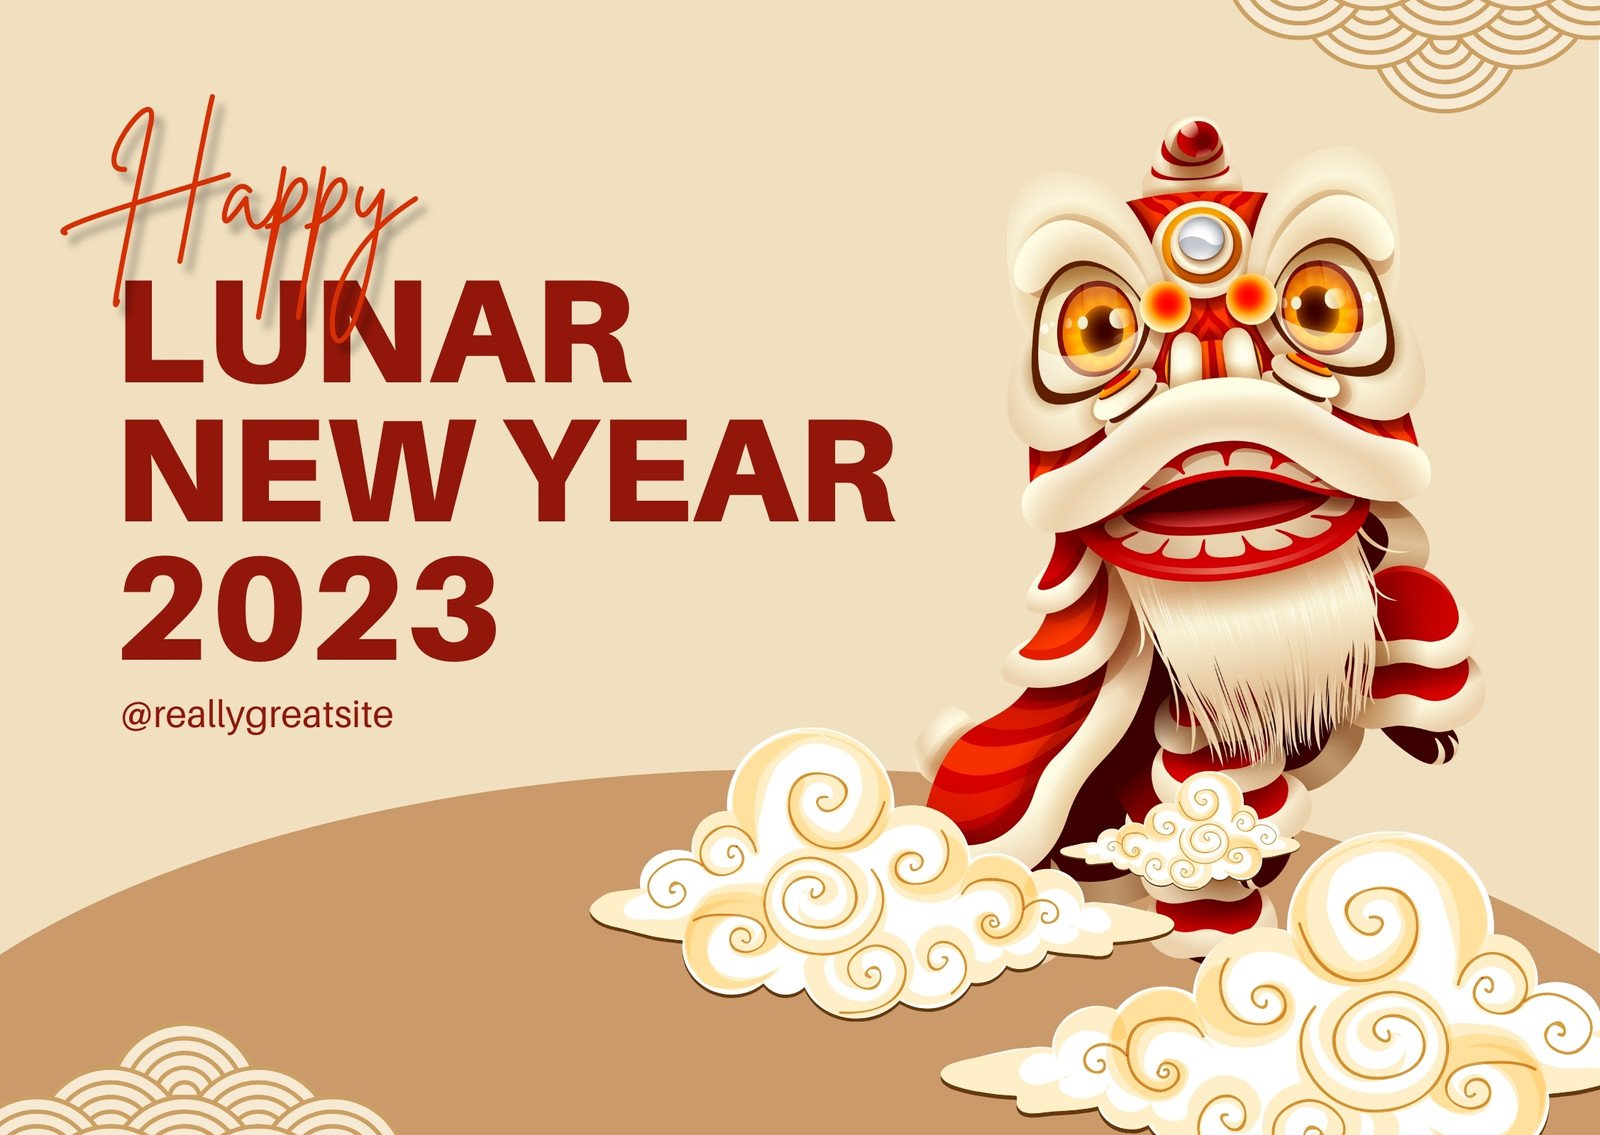 Lunar New Year 2023 Greetings Card